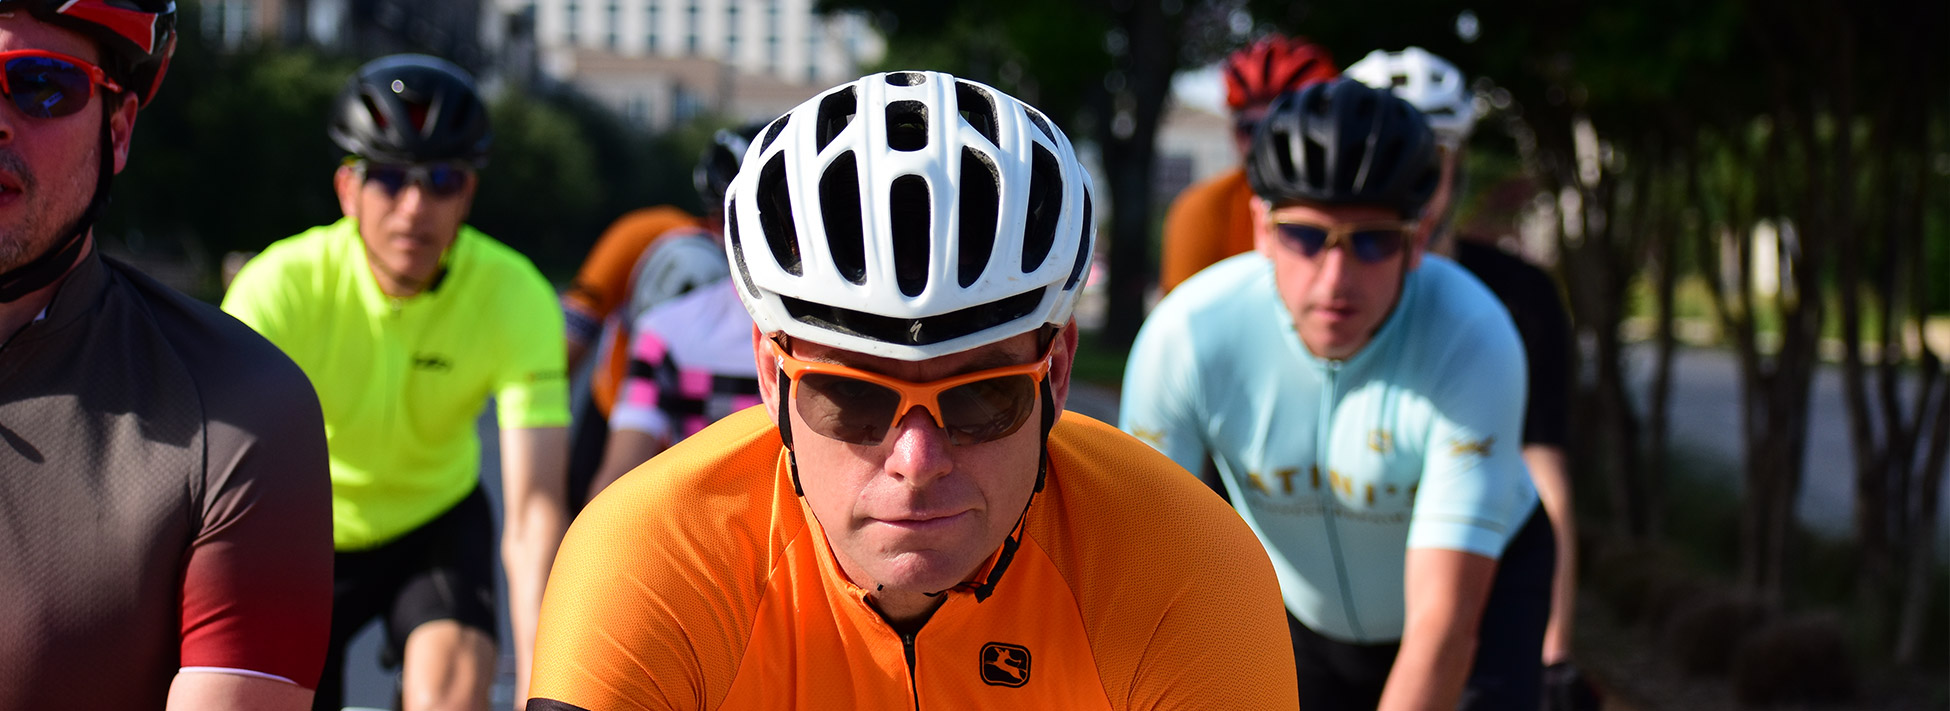 zoran-cycling-sunglasses-contact.jpg